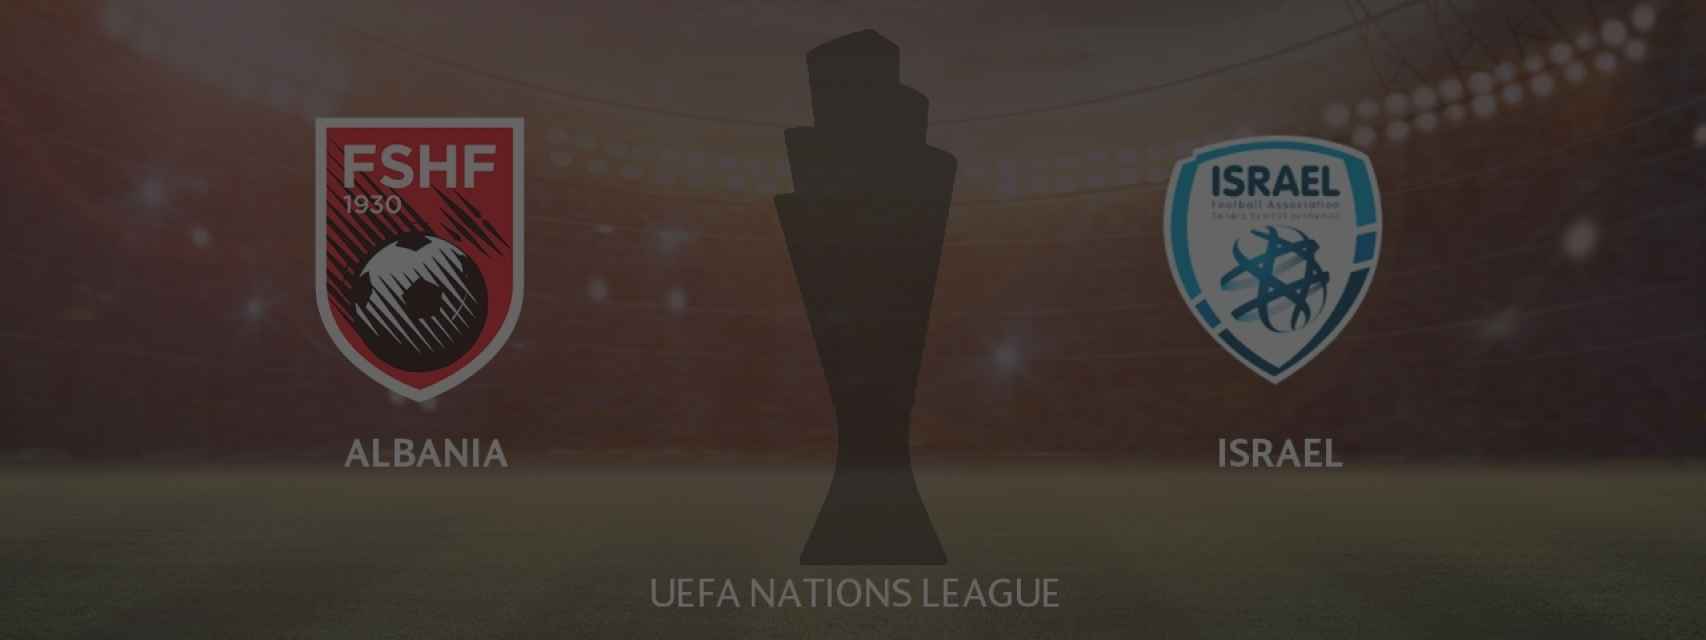 Albania - Israel, UEFA Nations League